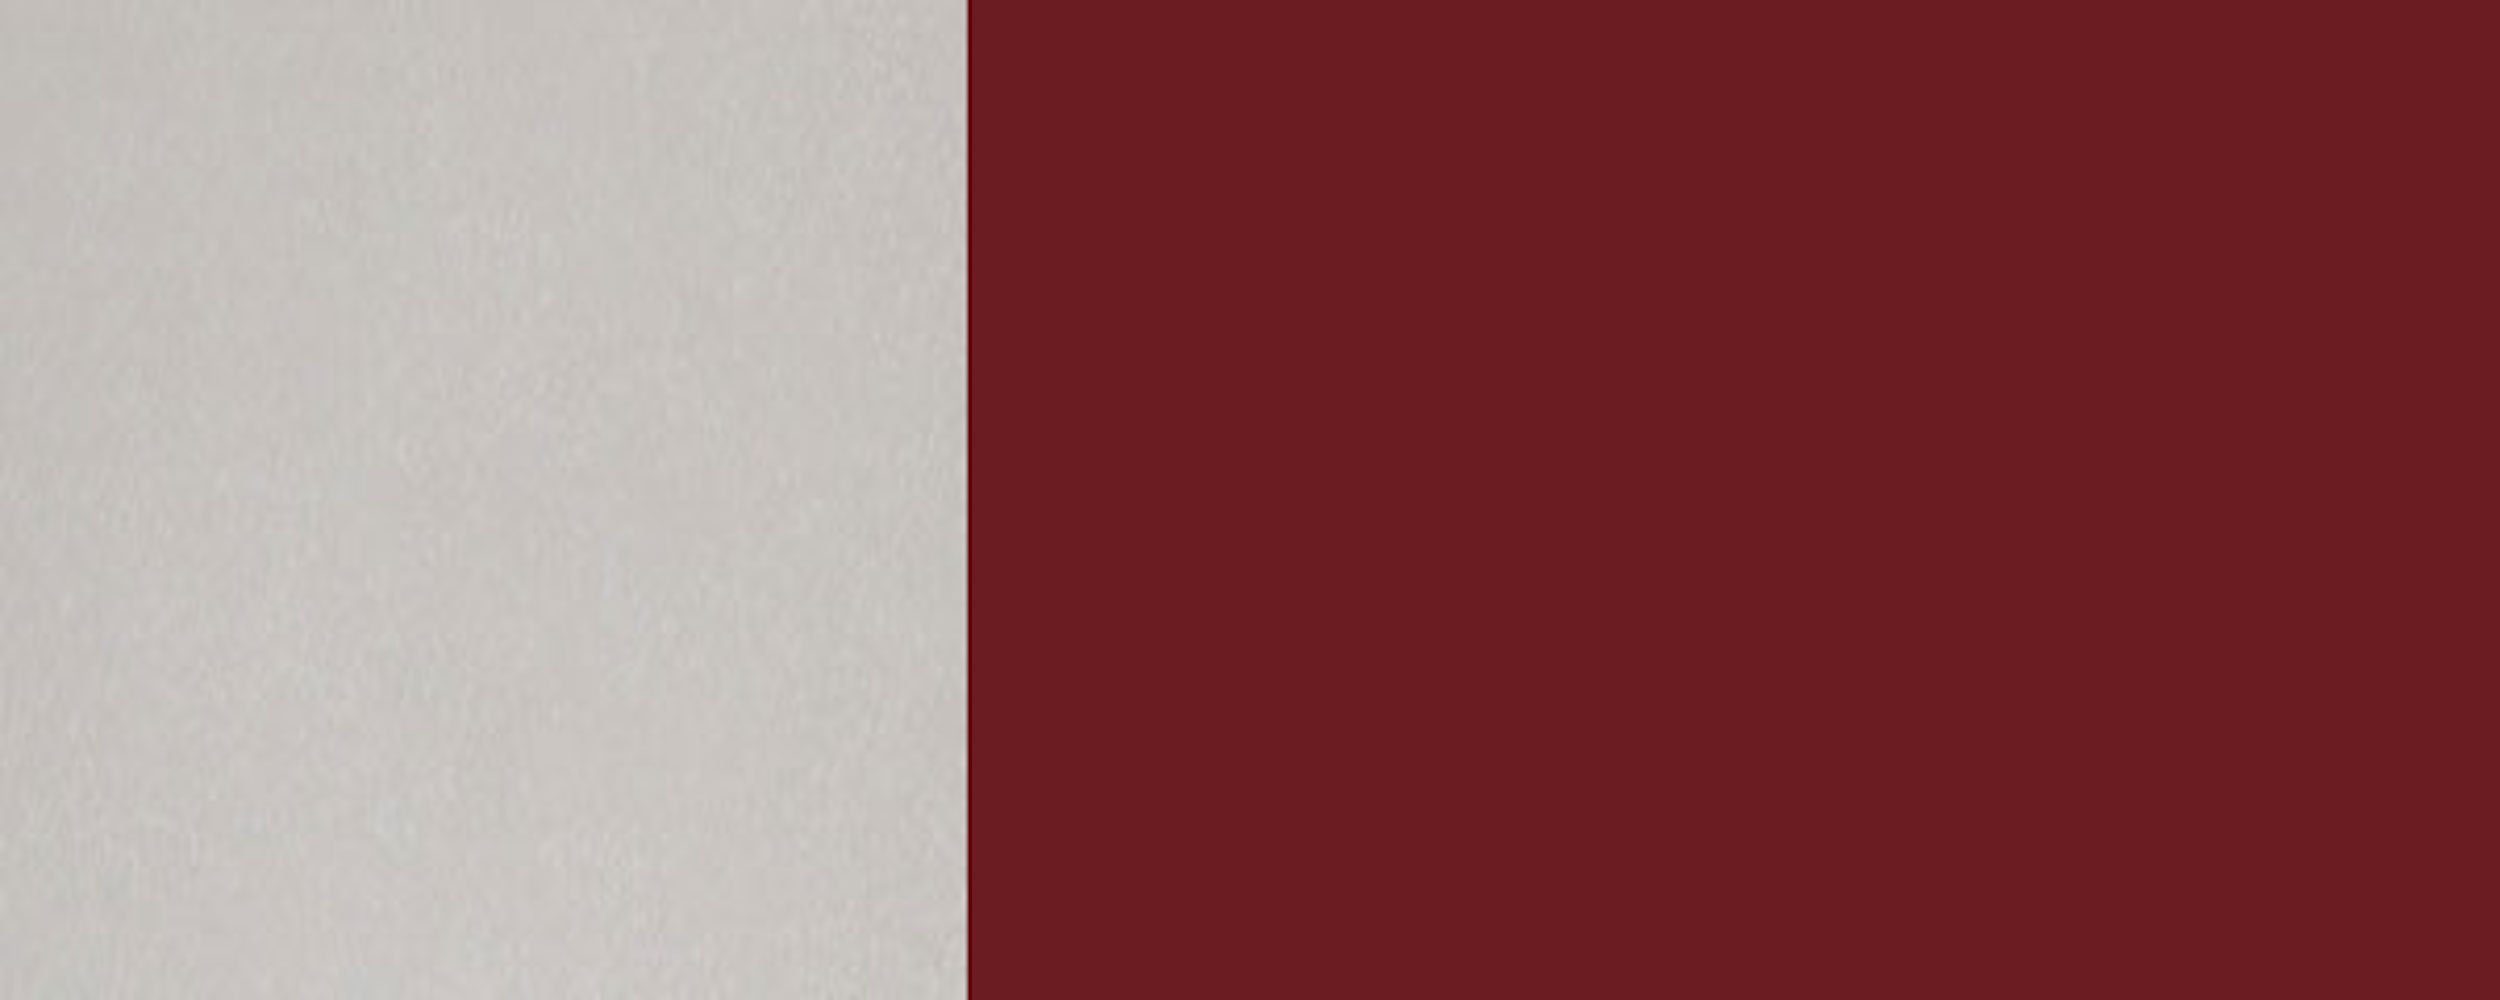 1-türig 30cm und Rimini purpurrot 3004 (Rimini) Klapphängeschrank Front- matt RAL Feldmann-Wohnen wählbar Korpusfarbe